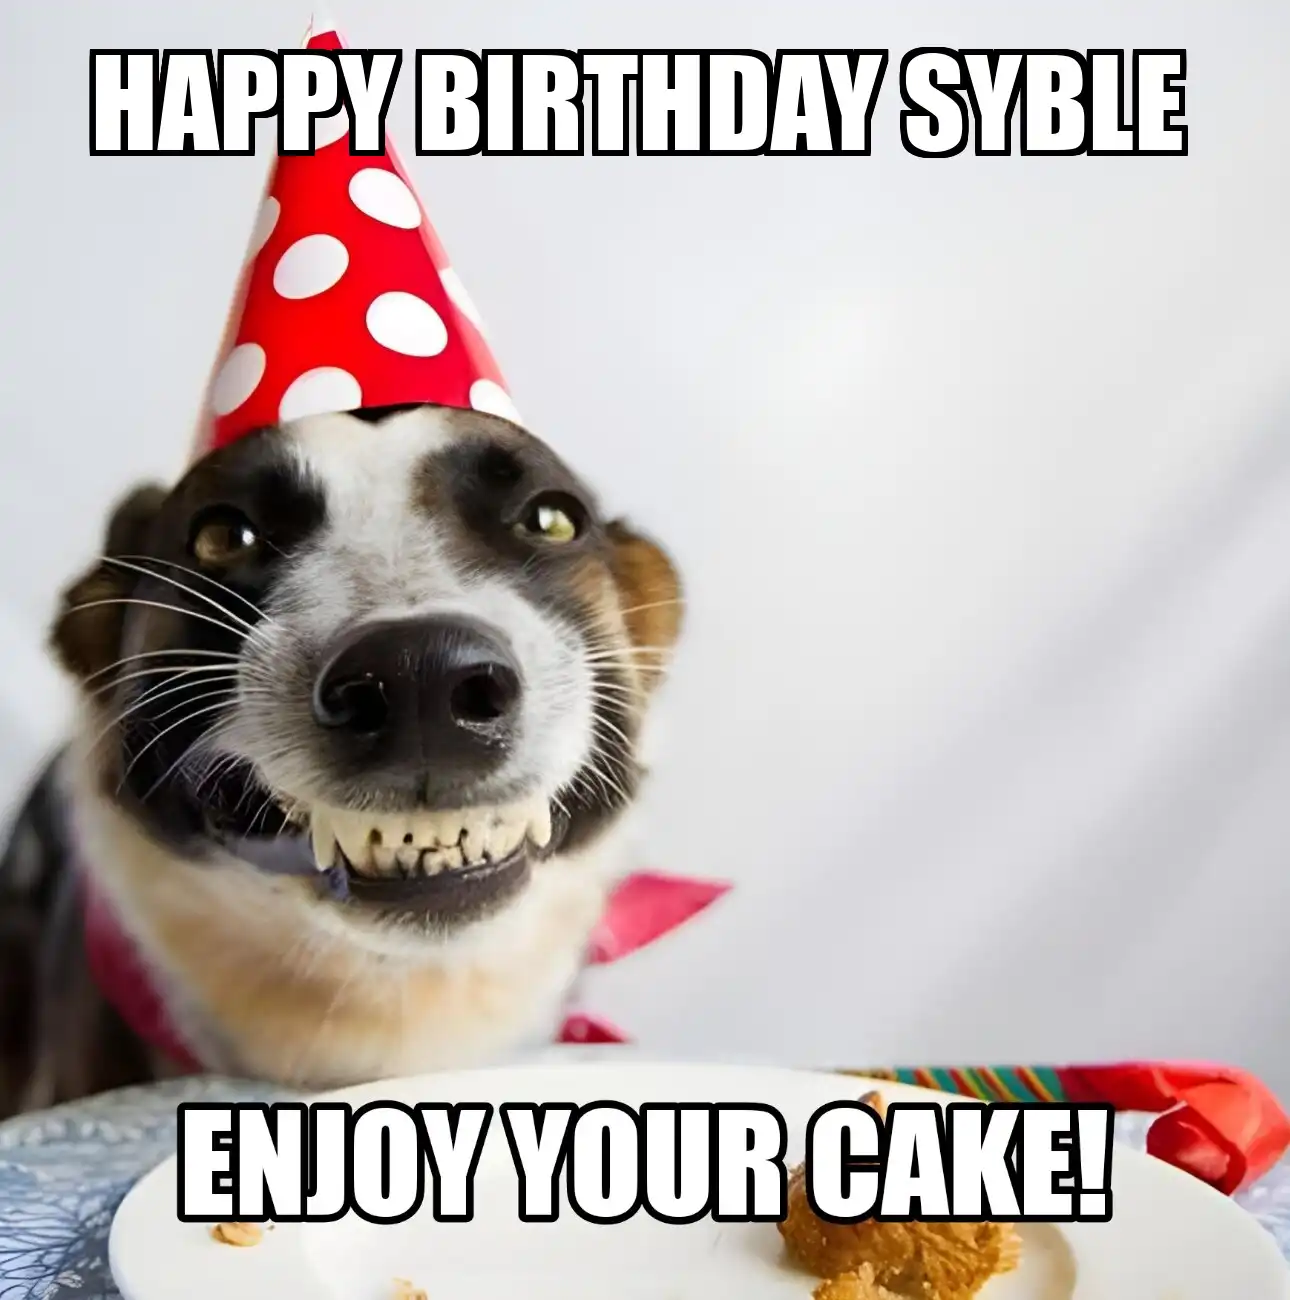 Happy Birthday Syble Enjoy Your Cake Dog Meme